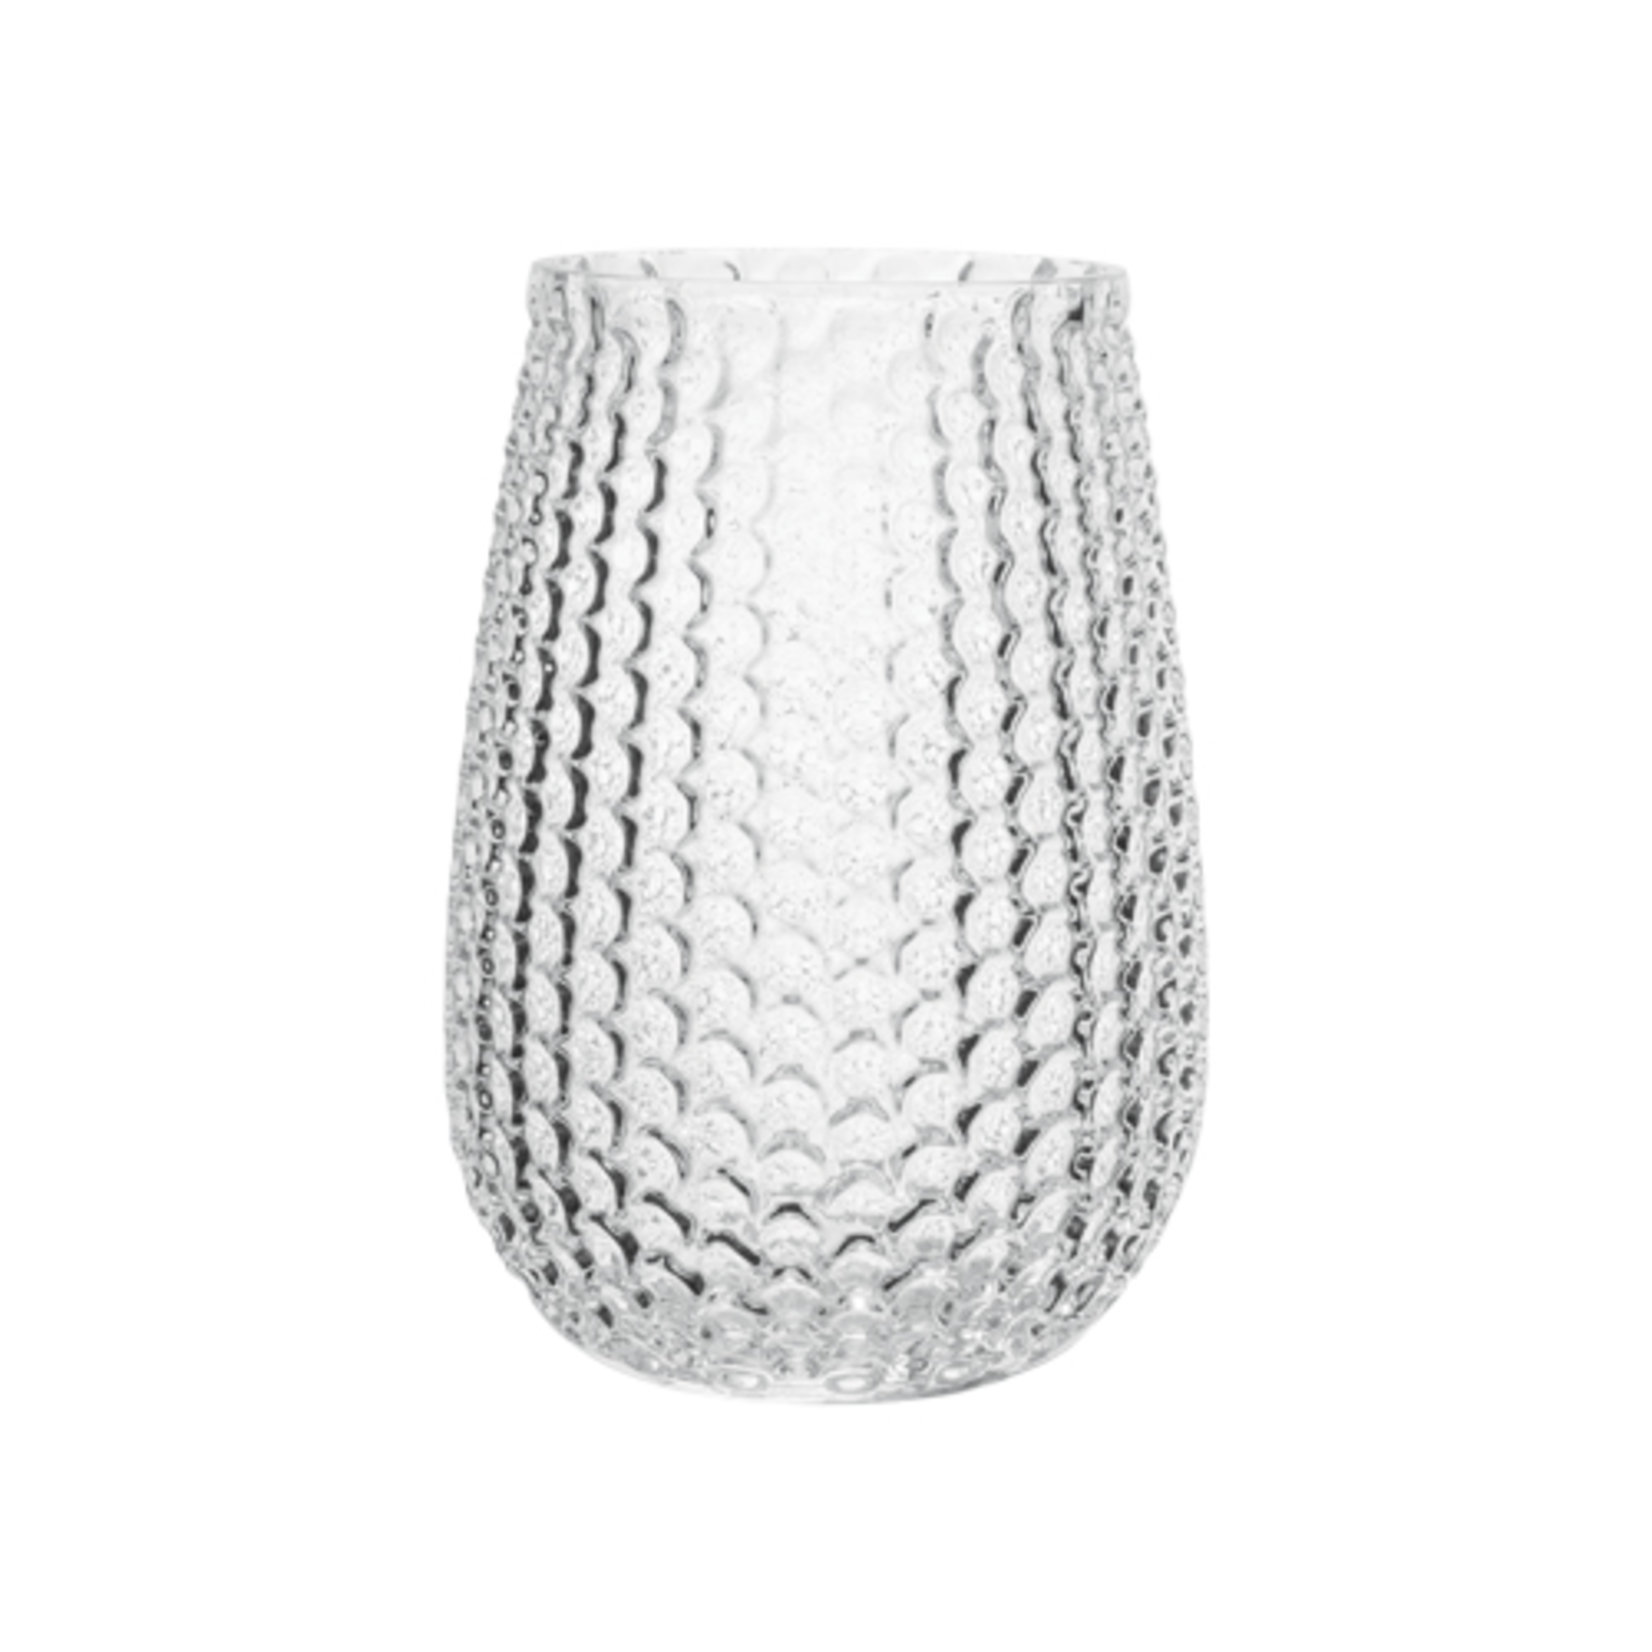 6"h x 3" Pebble Stone Vase - Crystal